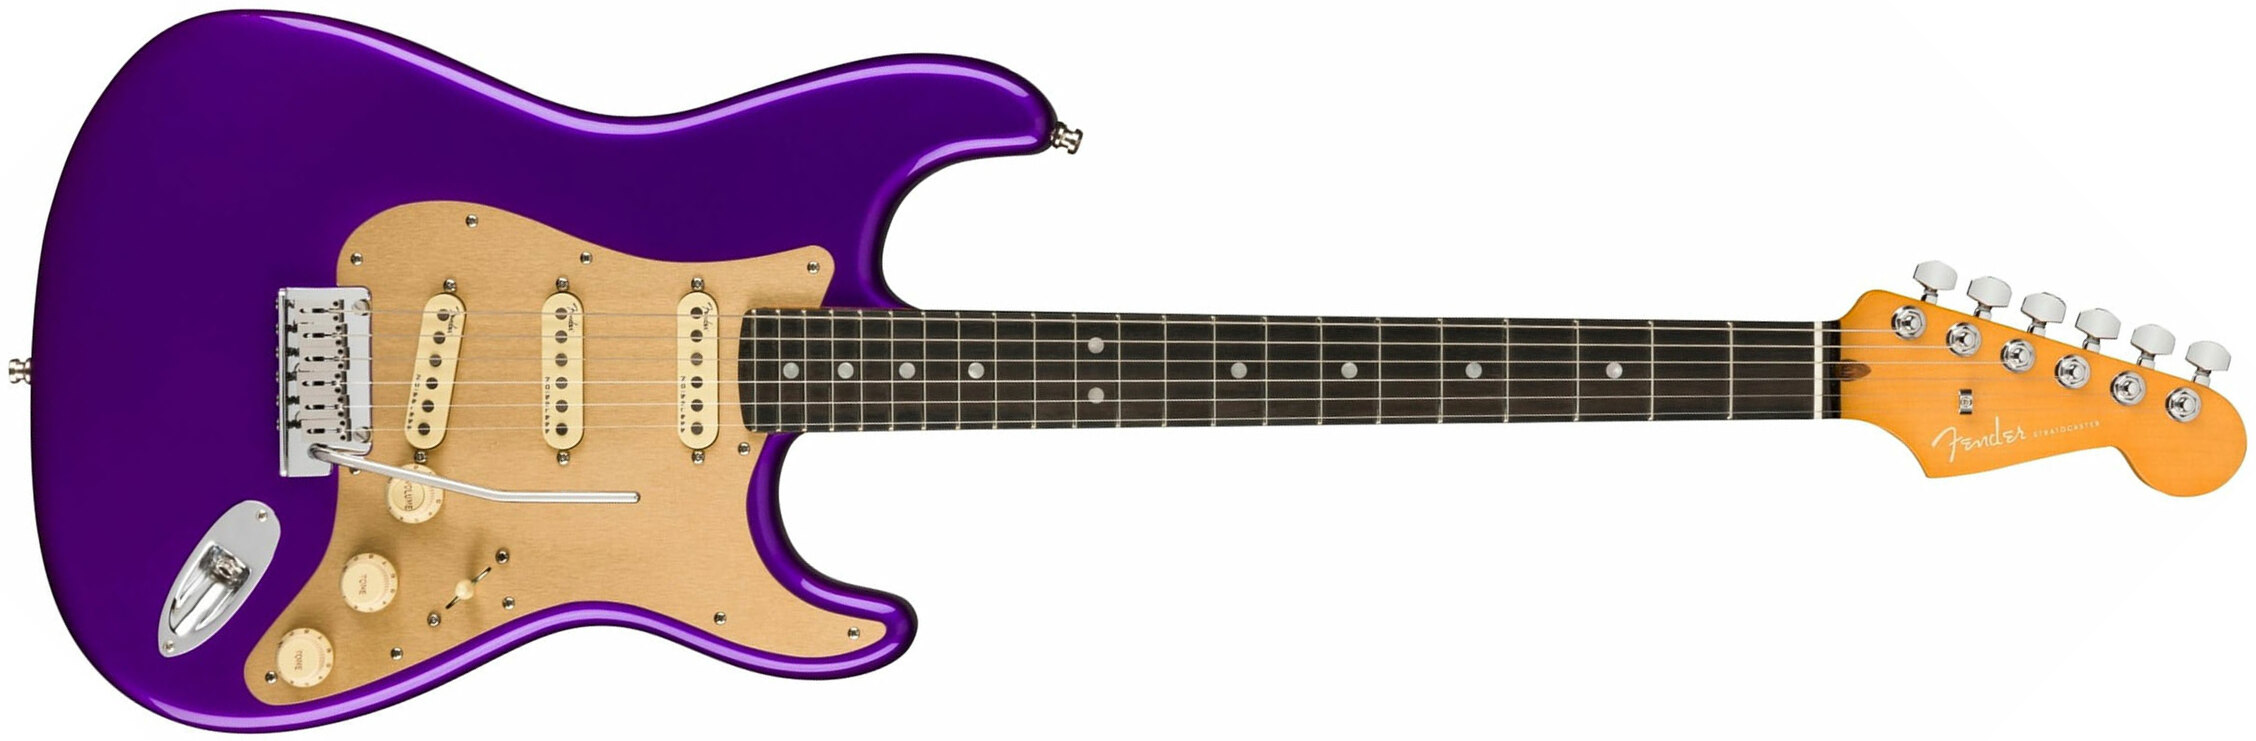 Fender Strat American Ultra Ltd Usa 3s Trem Eb - Plum Metallic - E-Gitarre in Str-Form - Main picture